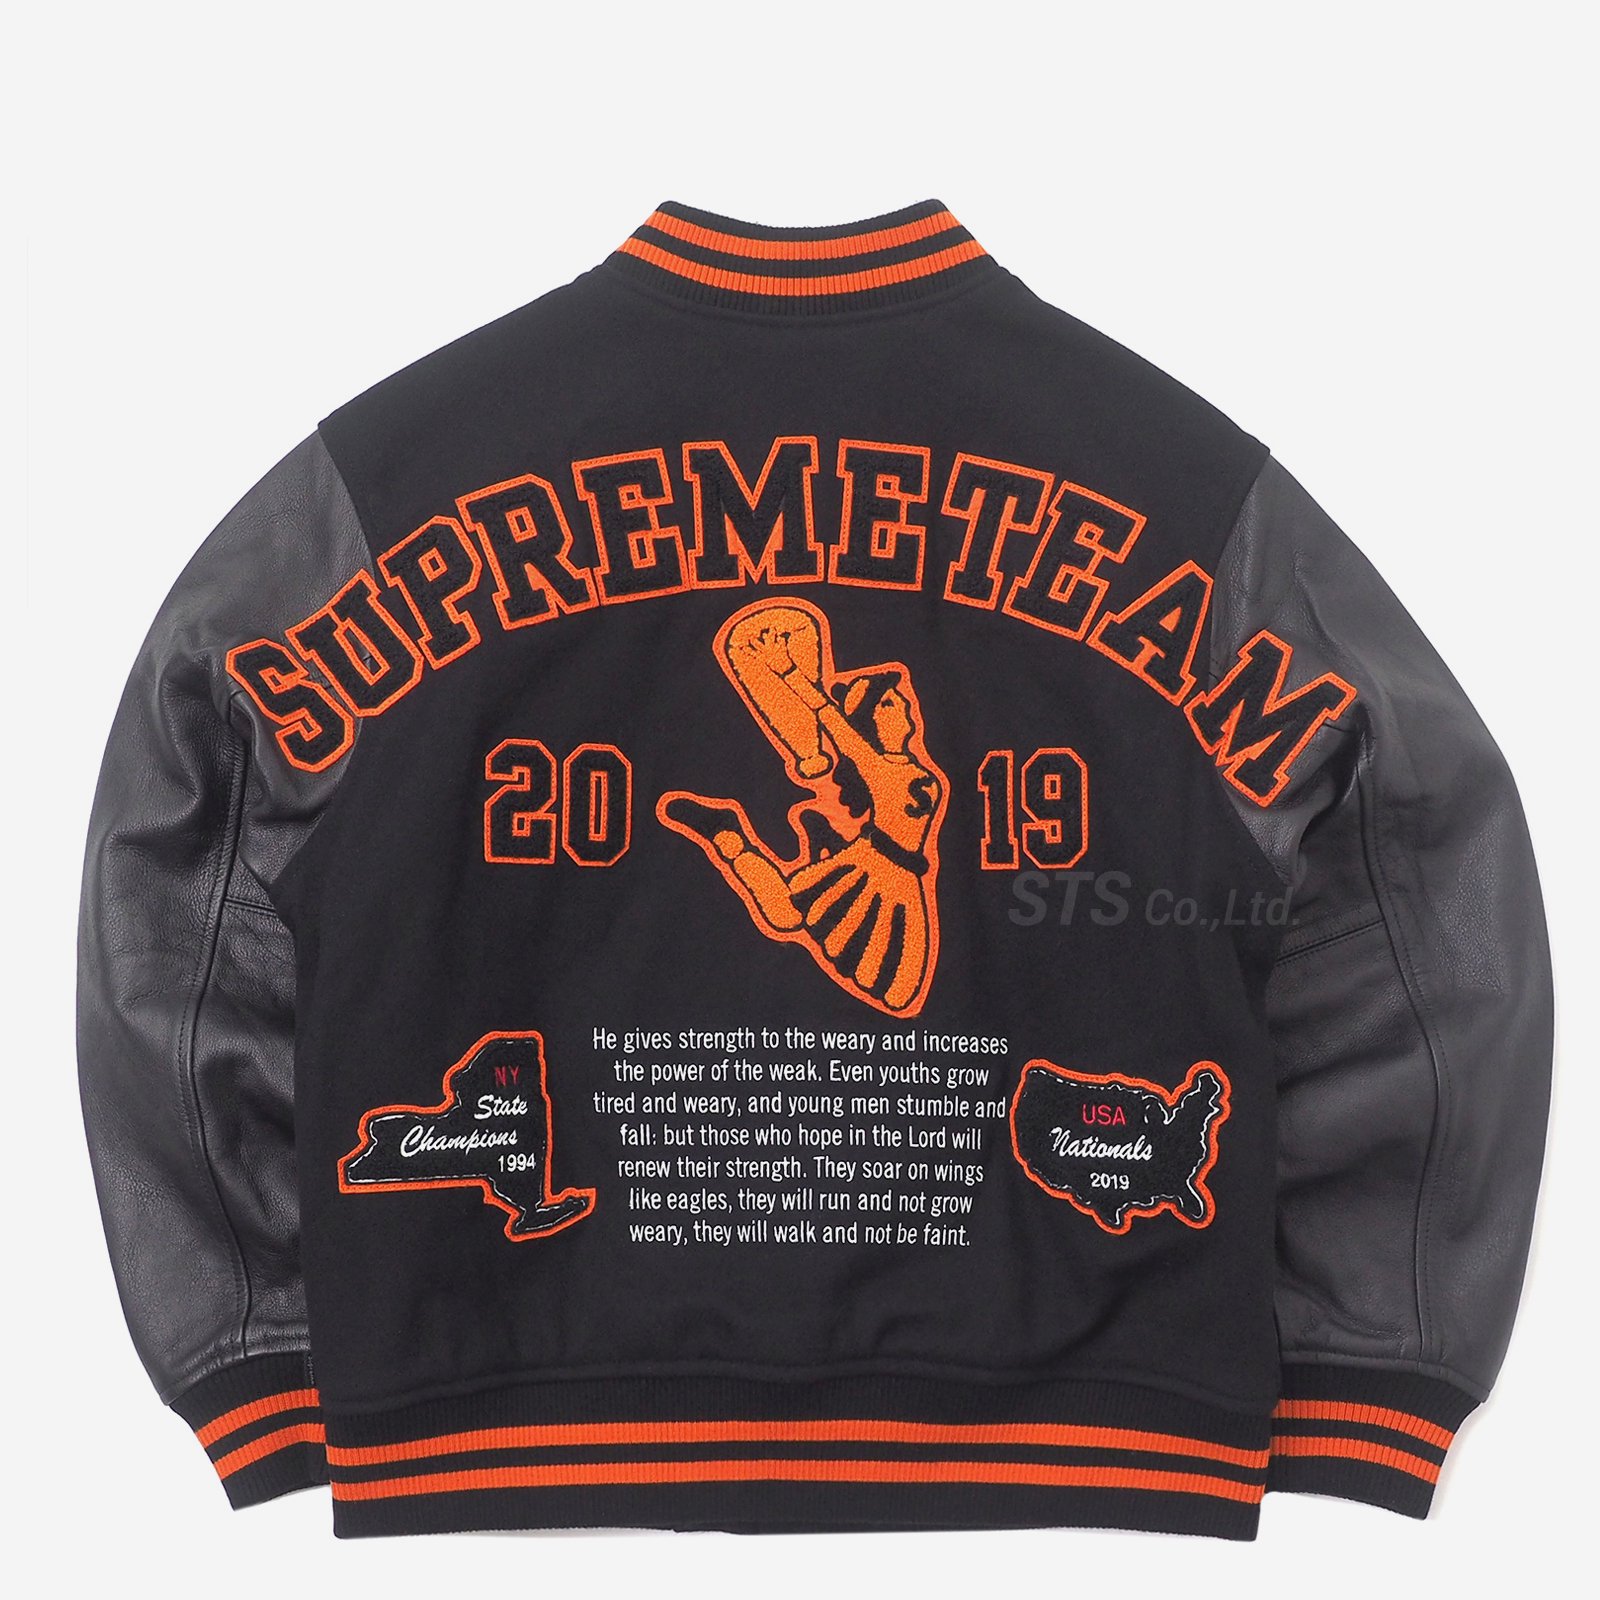 supreme team varsity jacket navy人気商品のため偽物も多いです